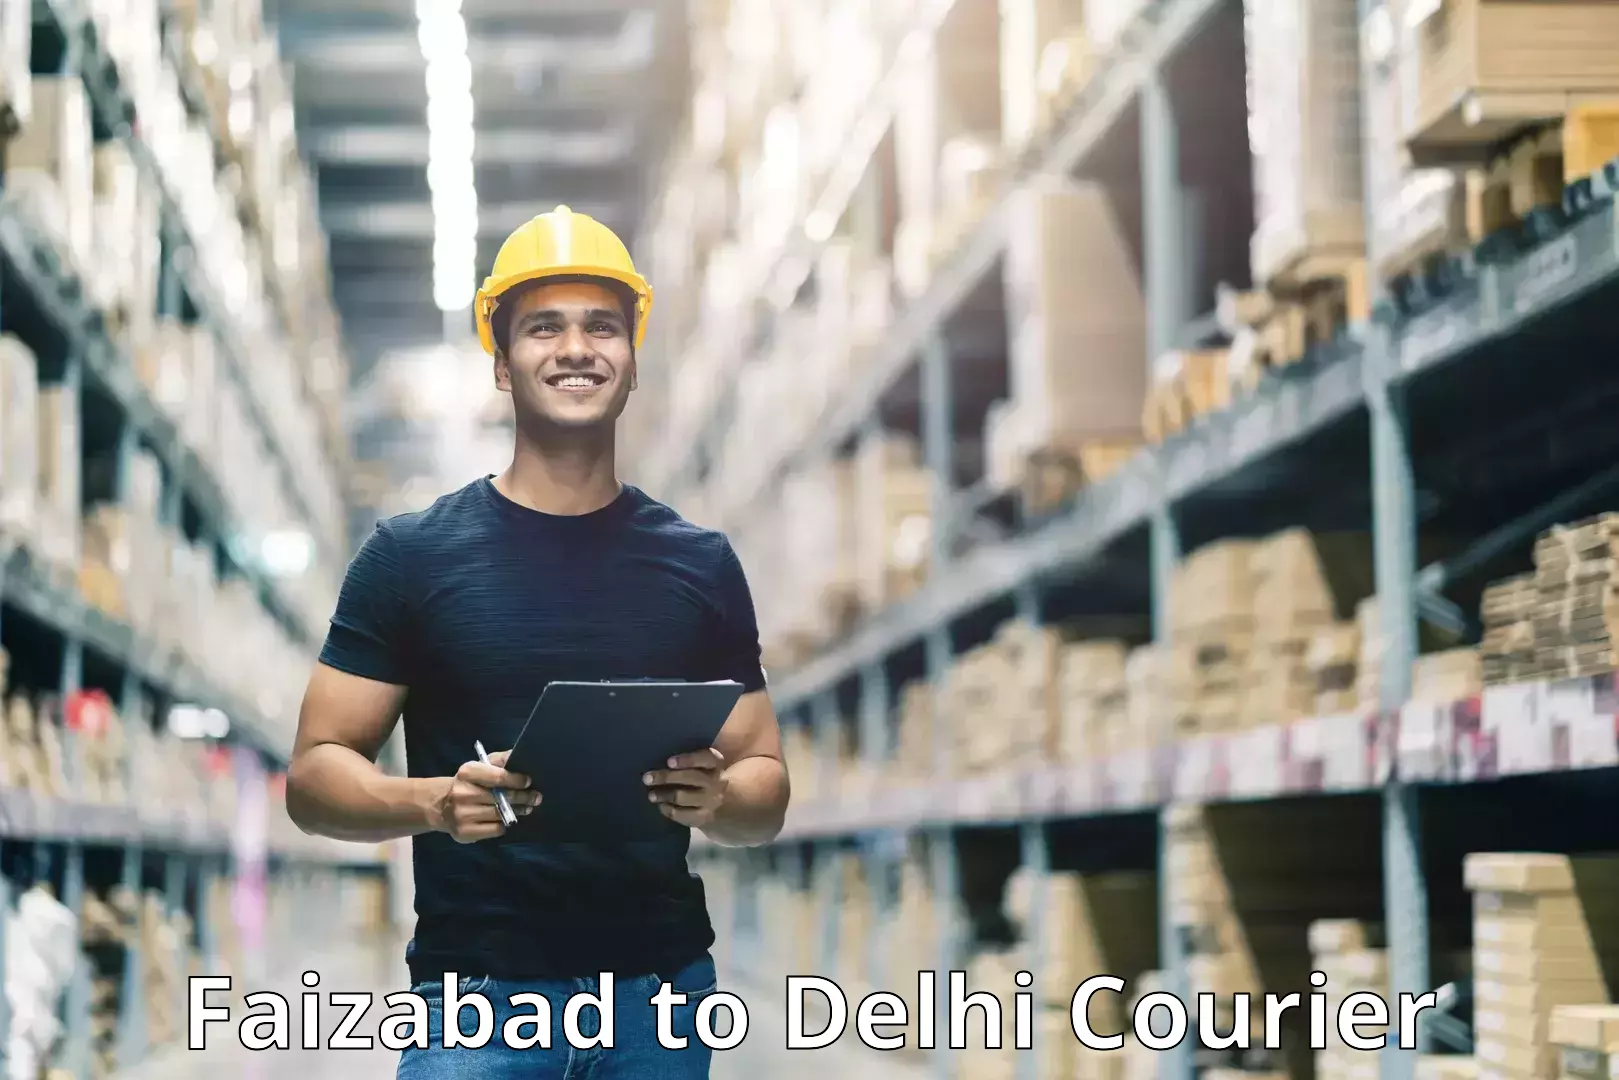 Courier rate comparison in Faizabad to East Delhi